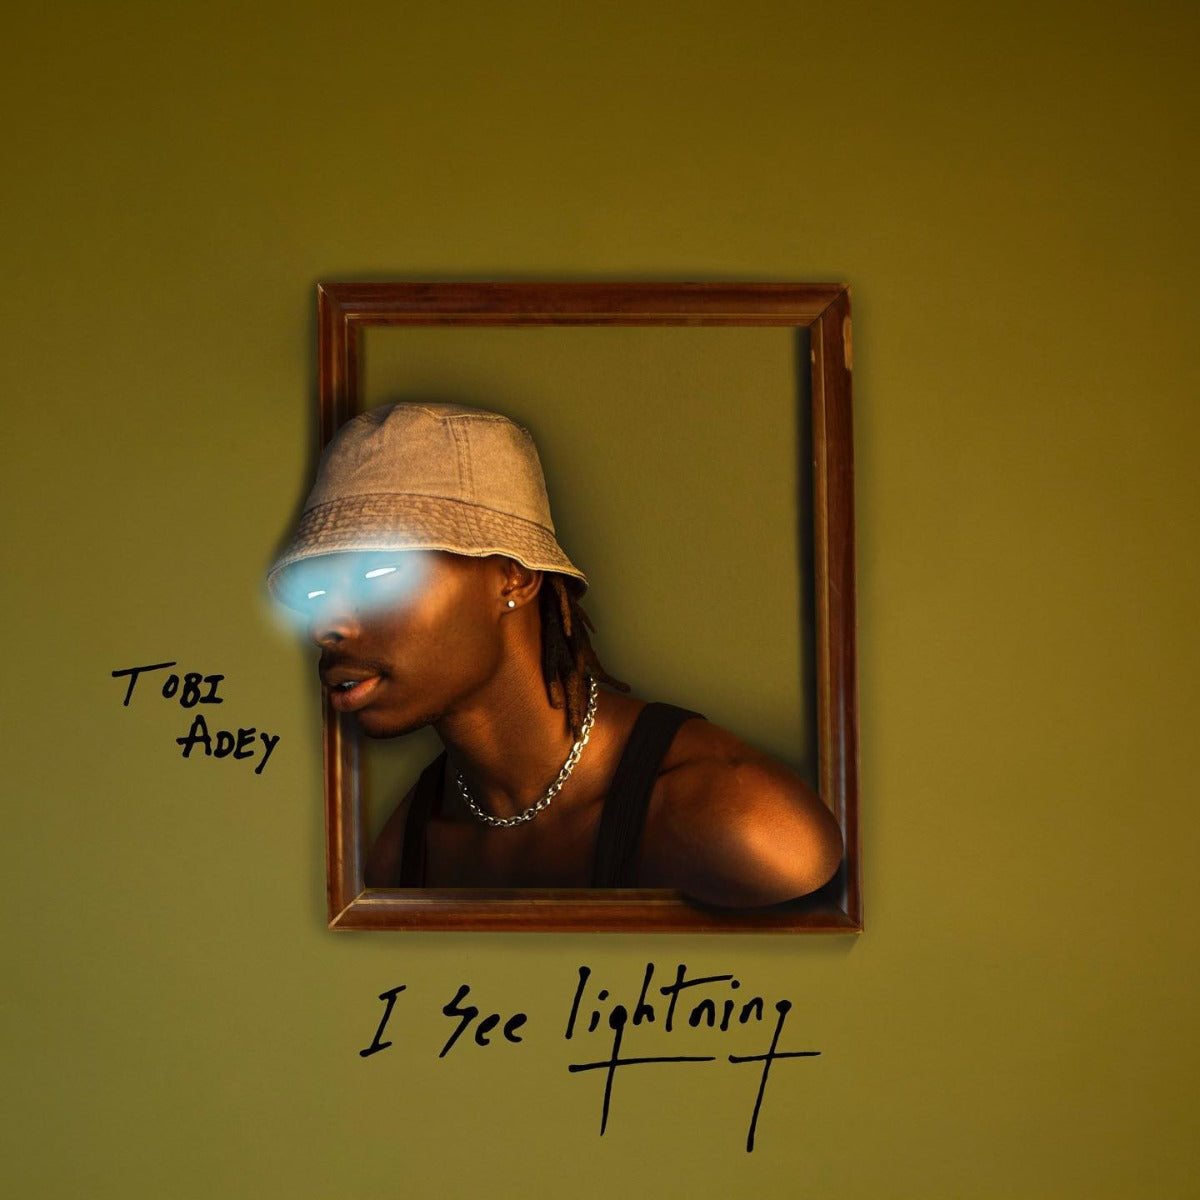 Tobi Adey – ‘I See Lightning’